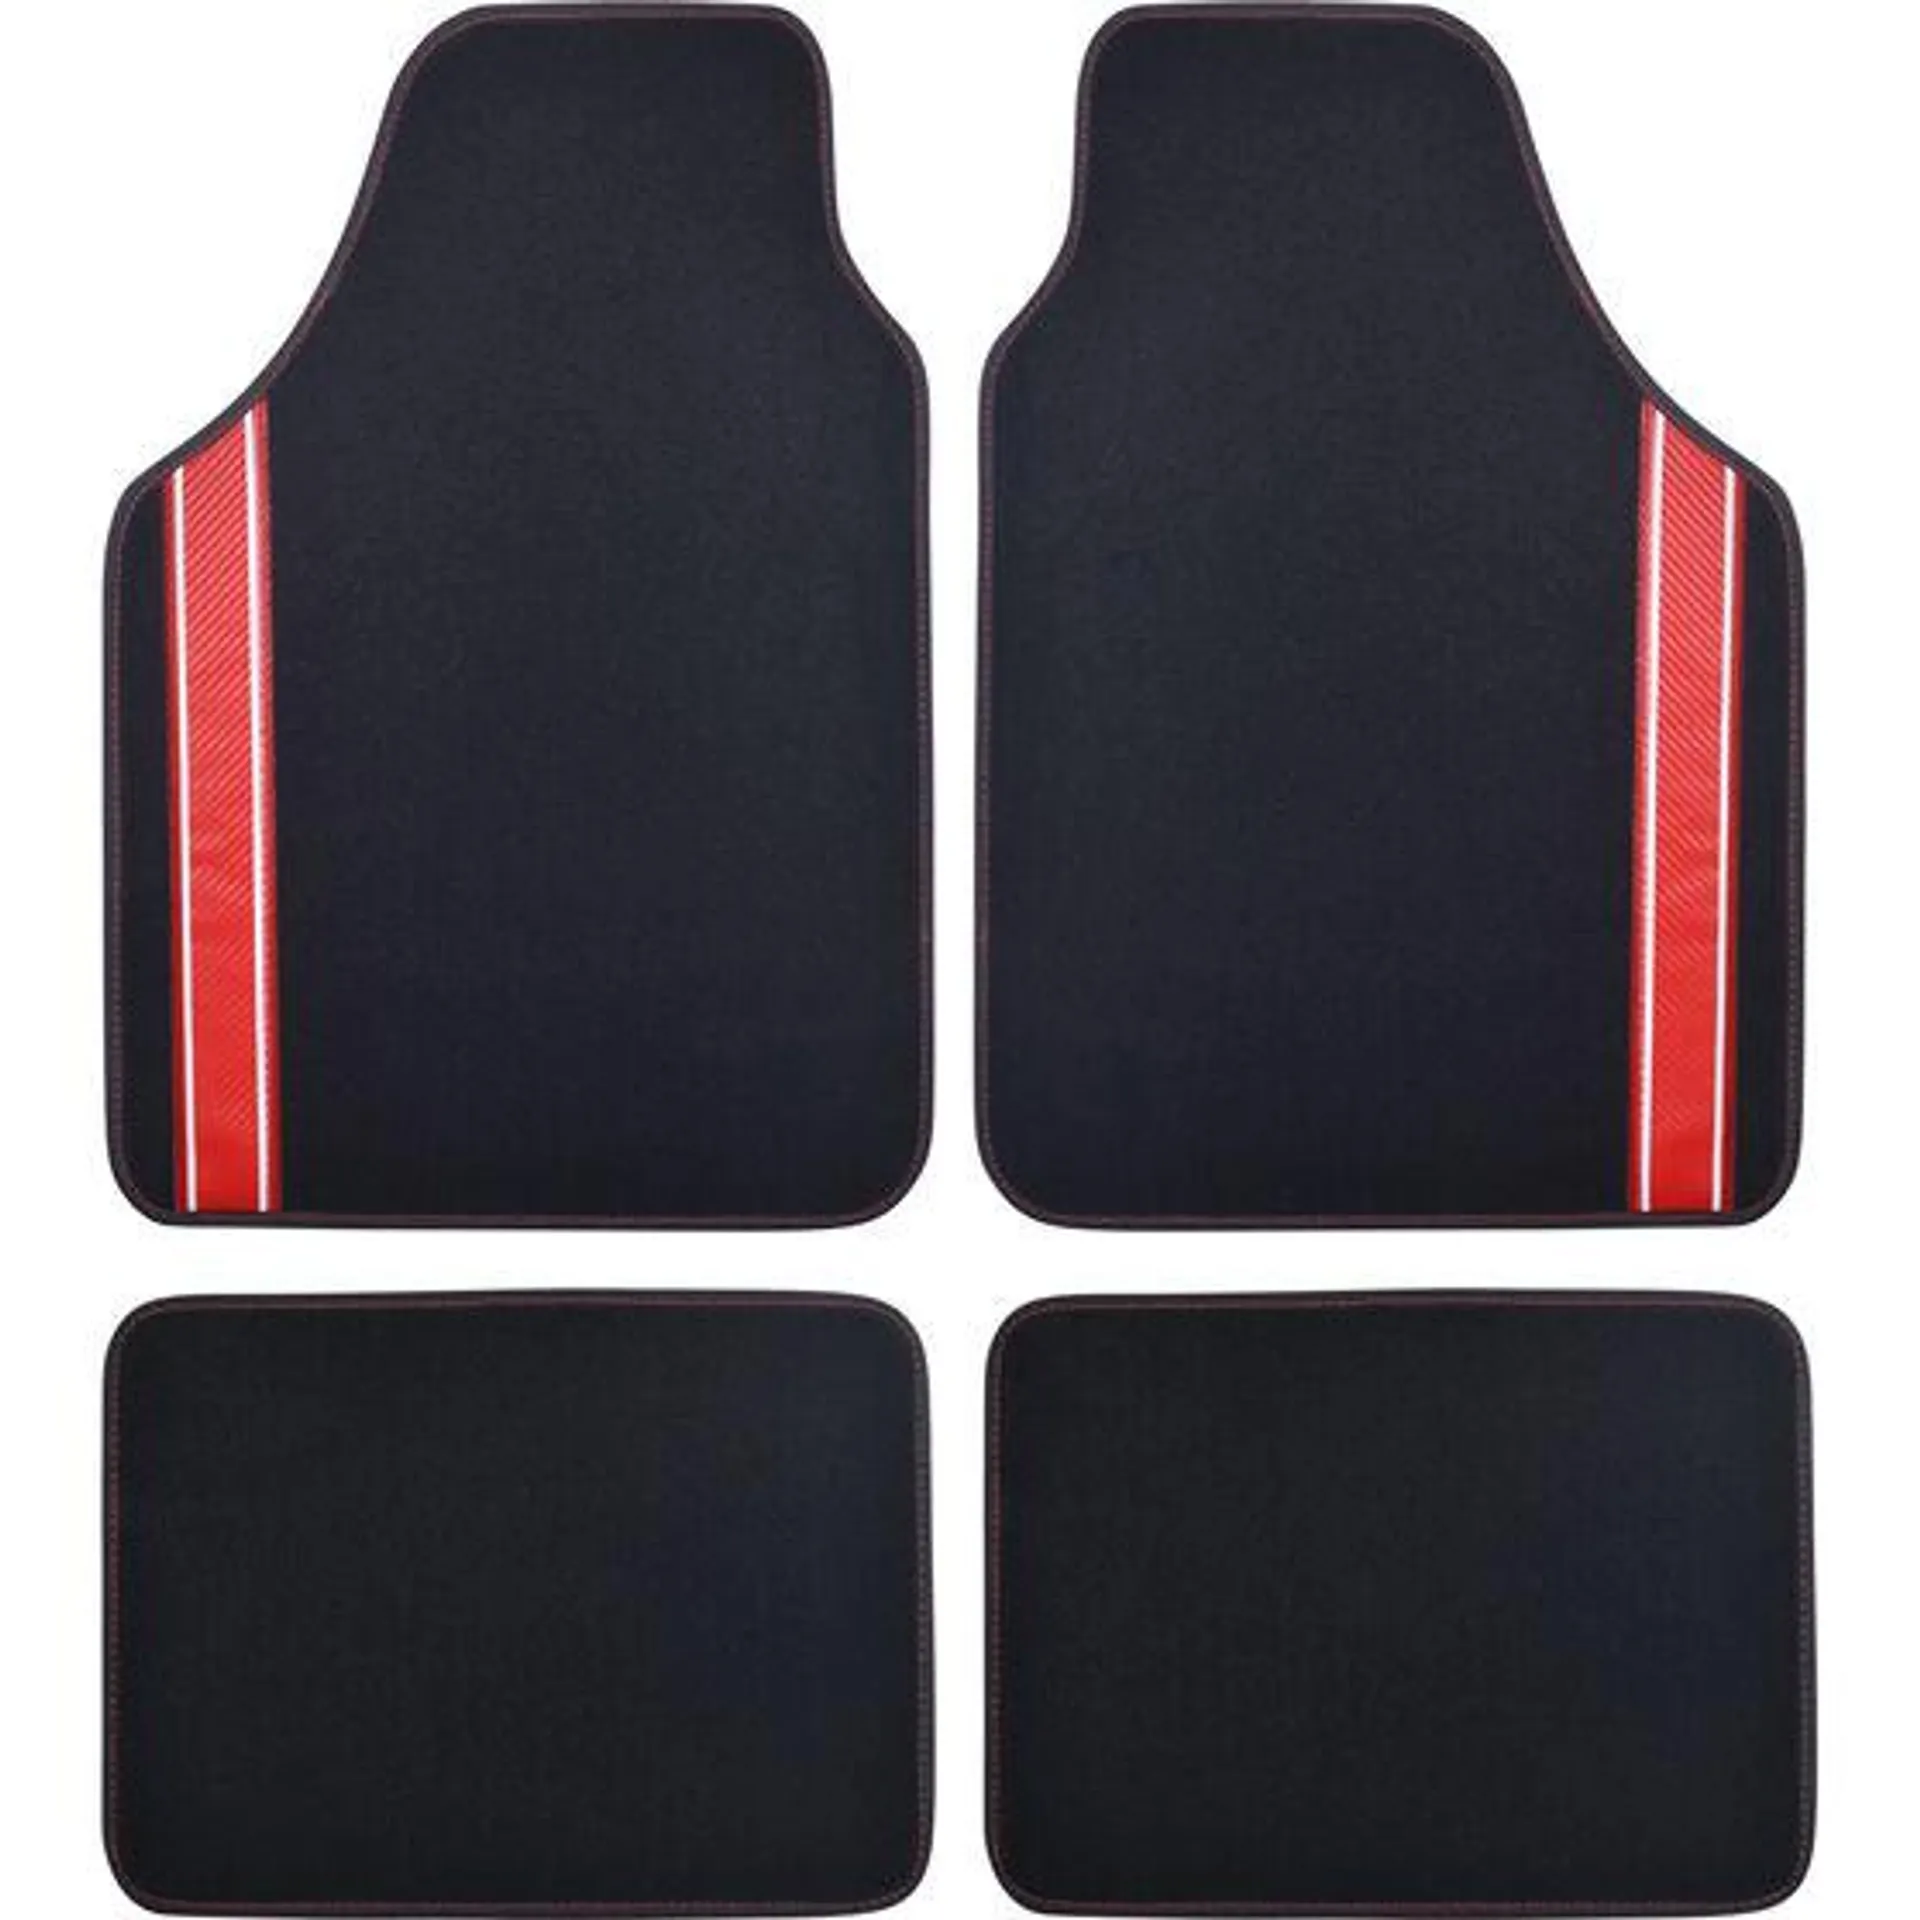 SCA Racing Car Floor Mats - Carpet, Black / Red, Set of 4